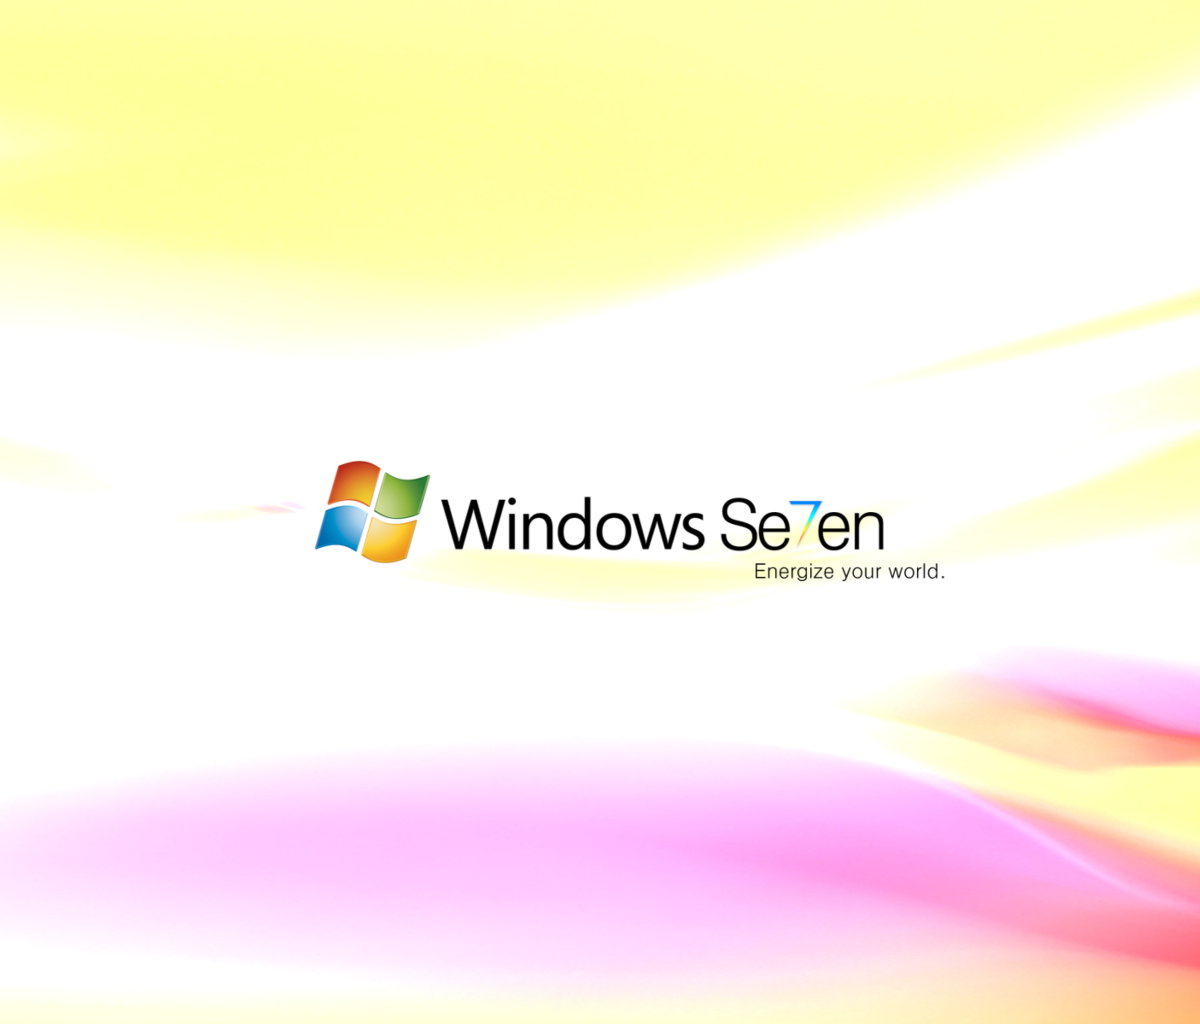 Das Windows Se7en Wallpaper 1200x1024